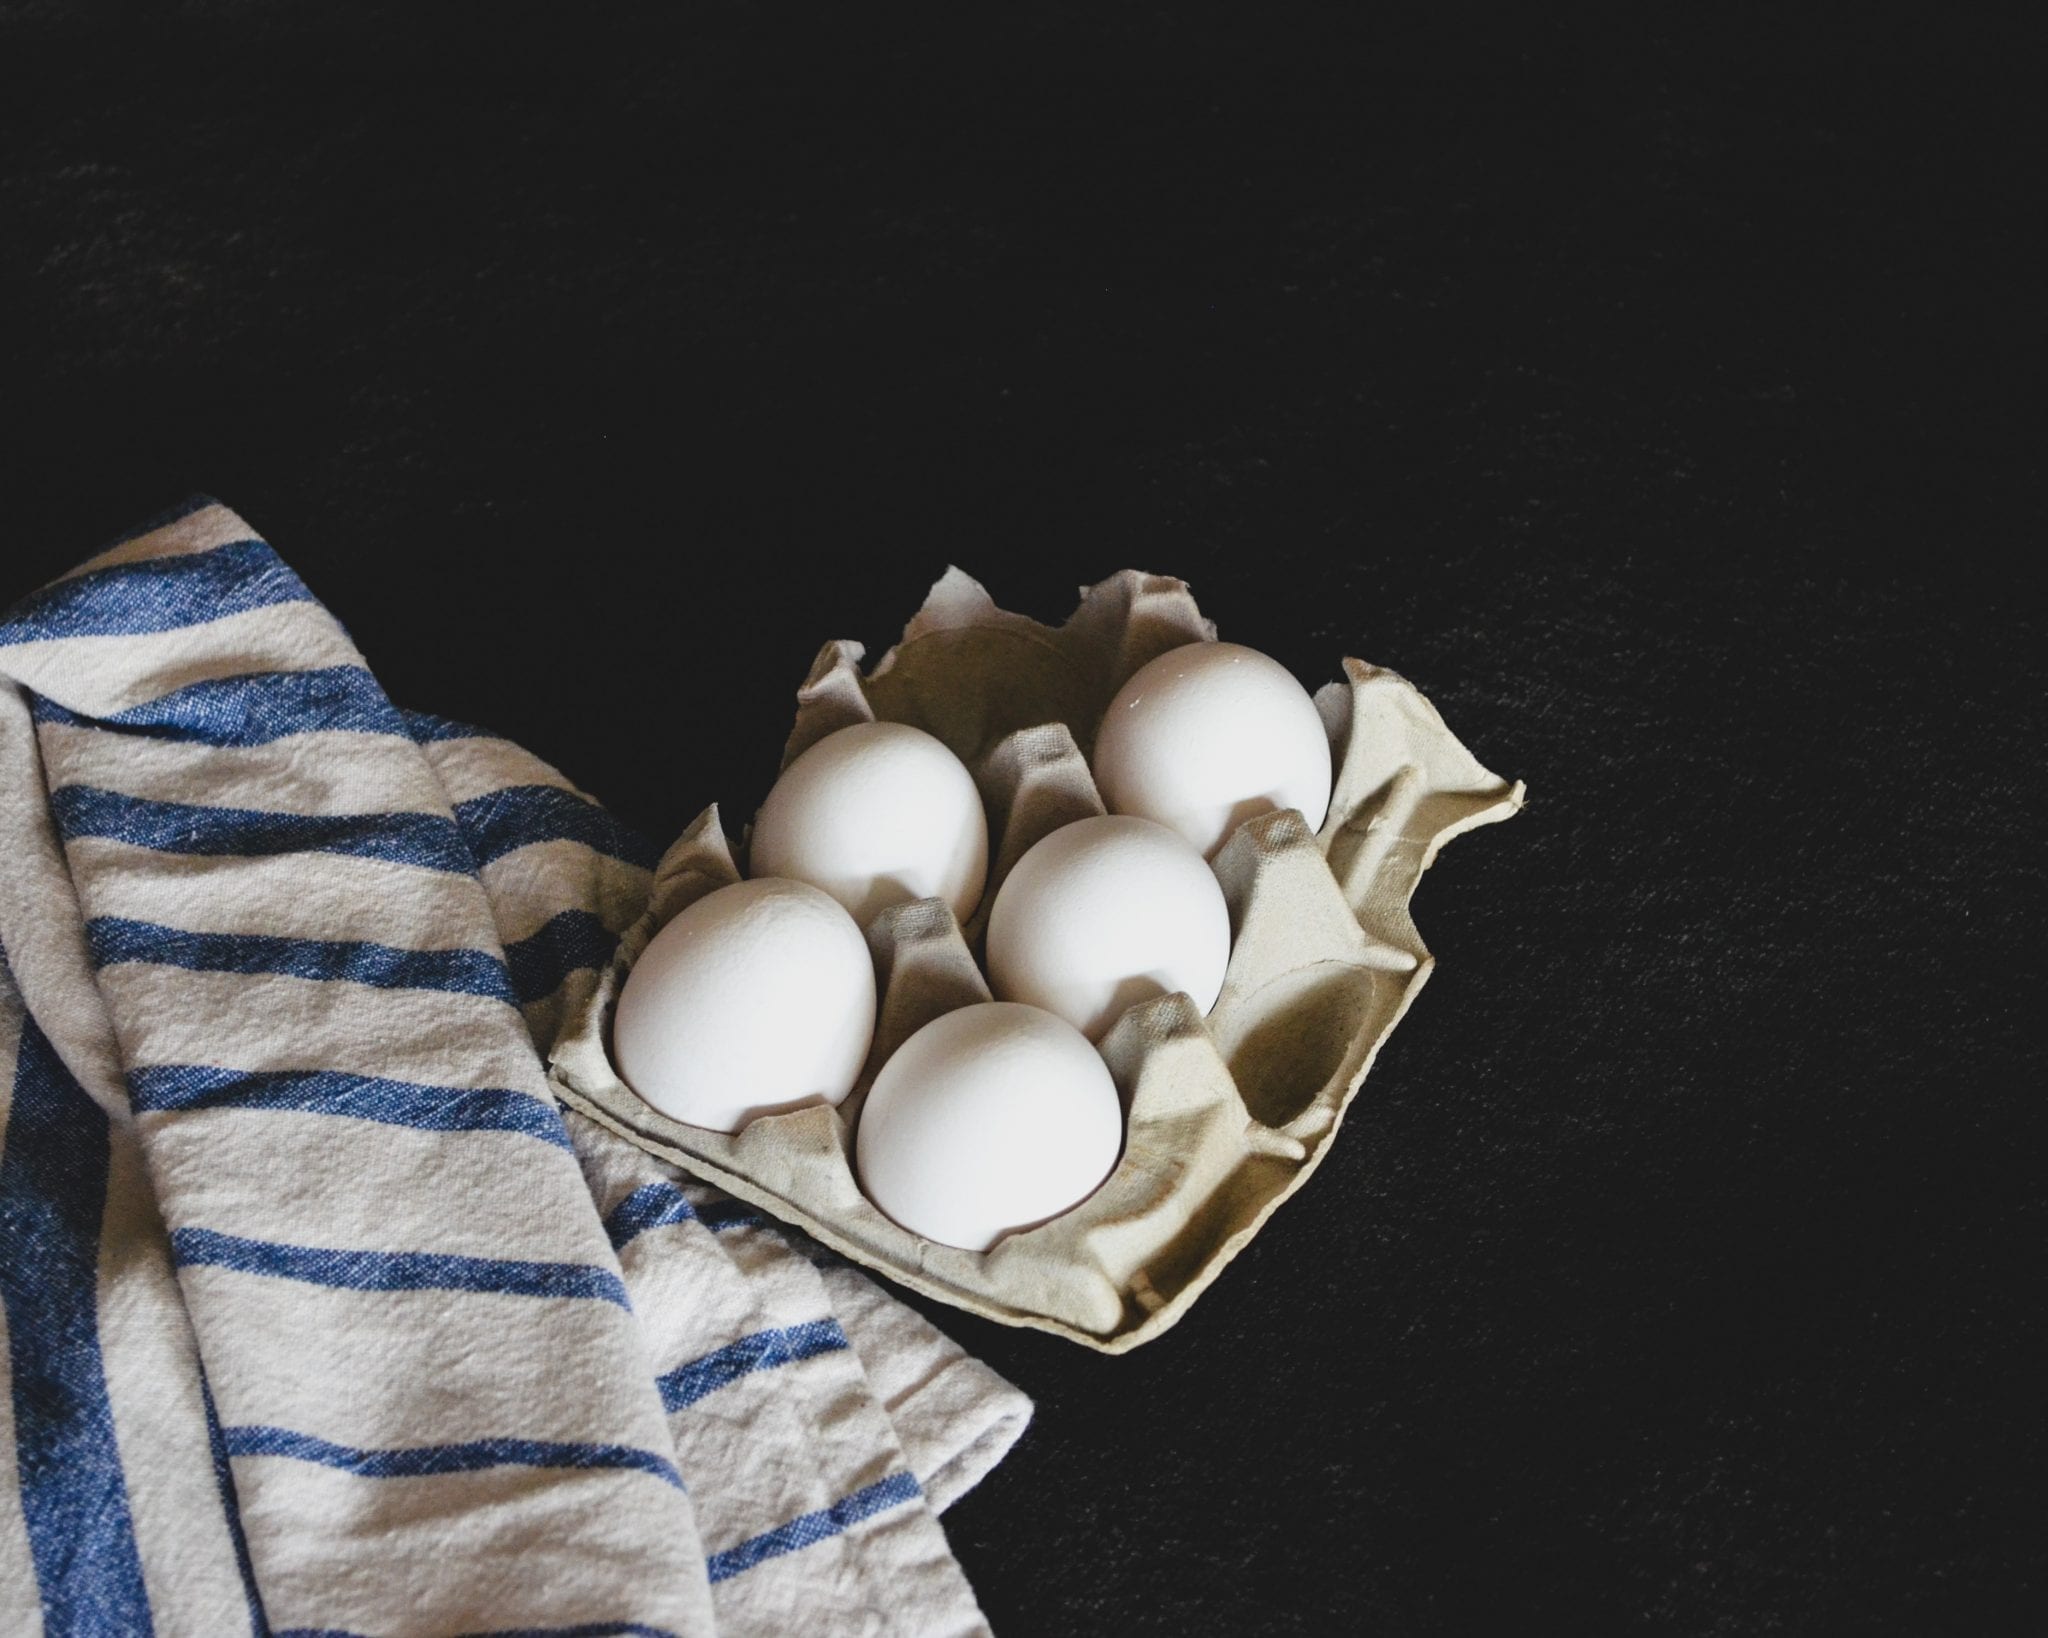 Contaminated Eggs Found in Nine States – Buyer Beware